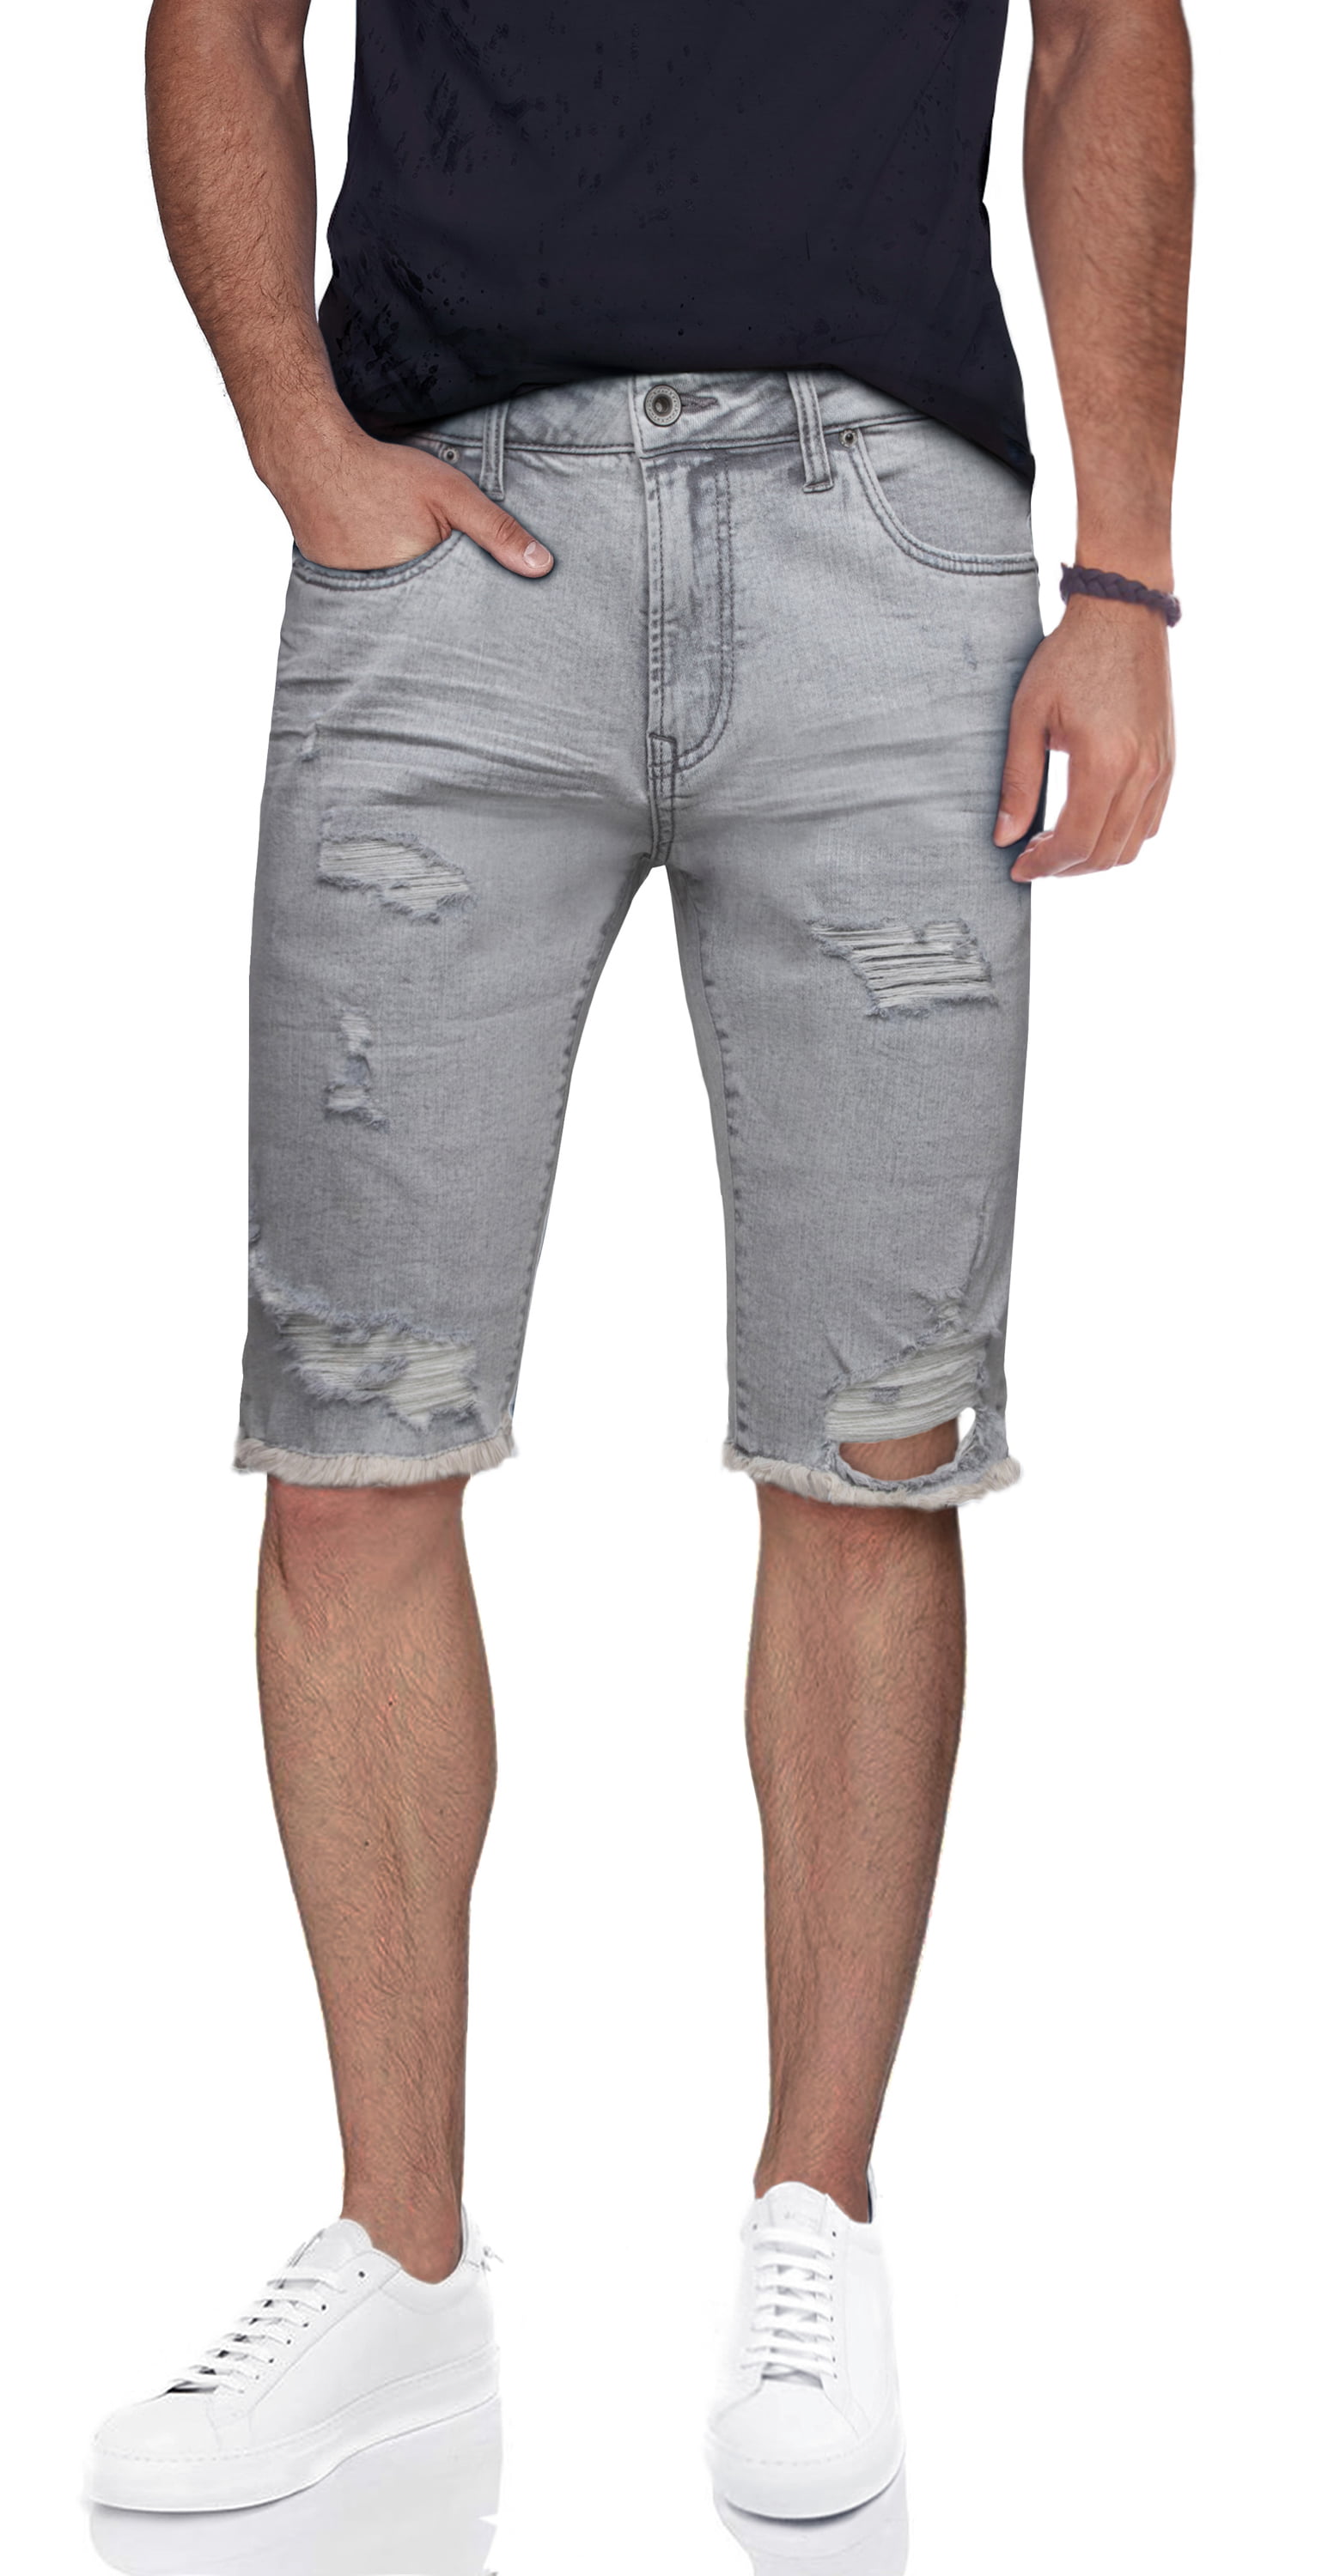 Document studio kleding RAWX Men's Denim Shorts, Rips Distress Frayed Cut Off Slim Look Jeans Short  for Men - Walmart.com